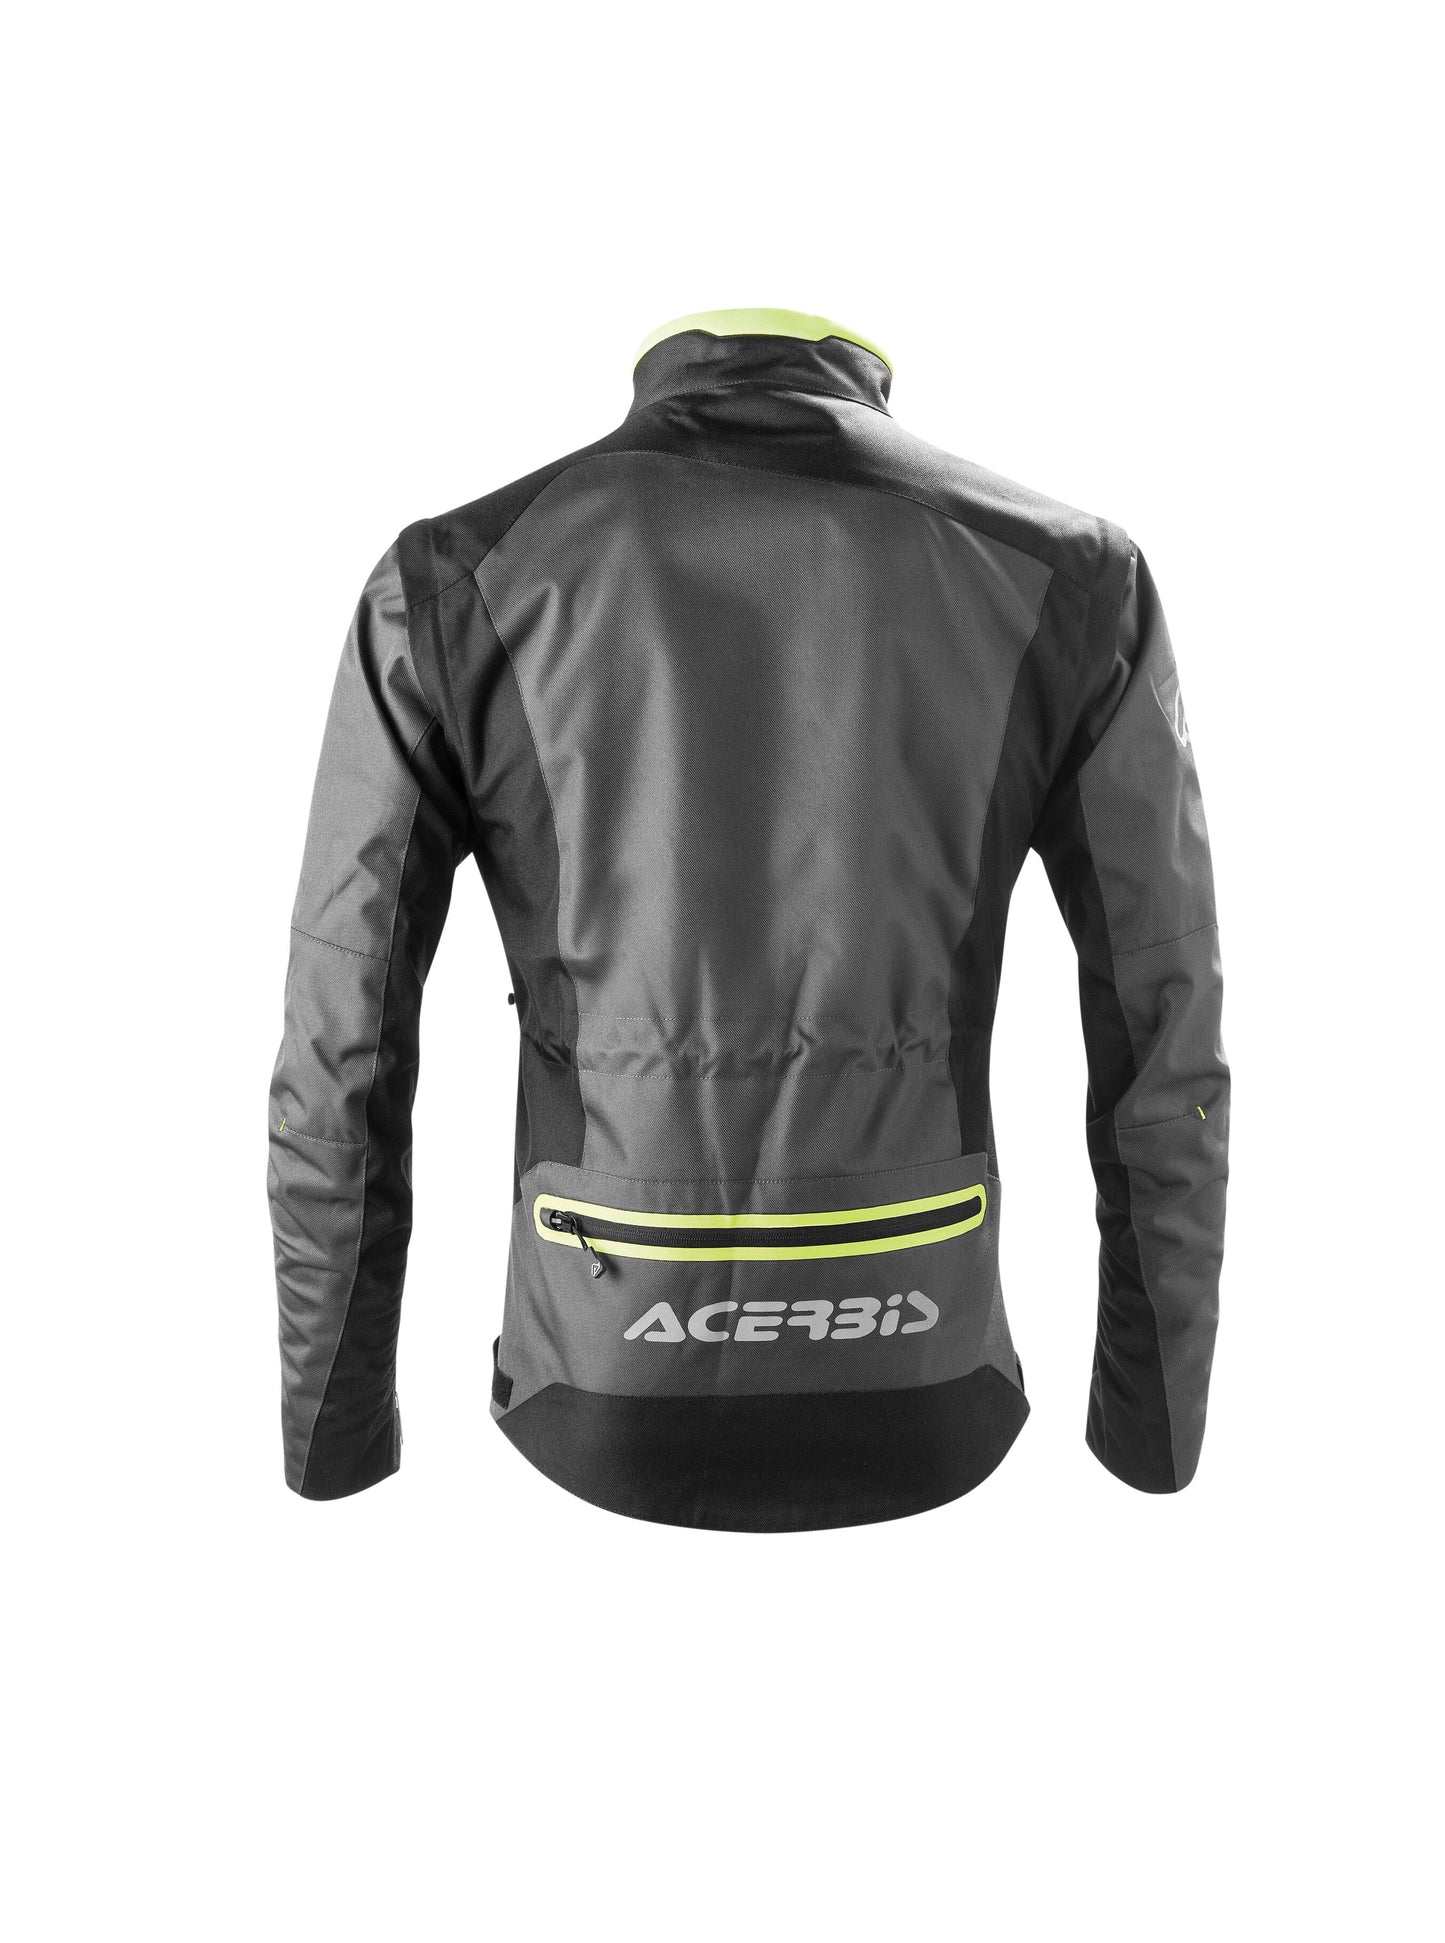 Acerbis Enduro One Jacket